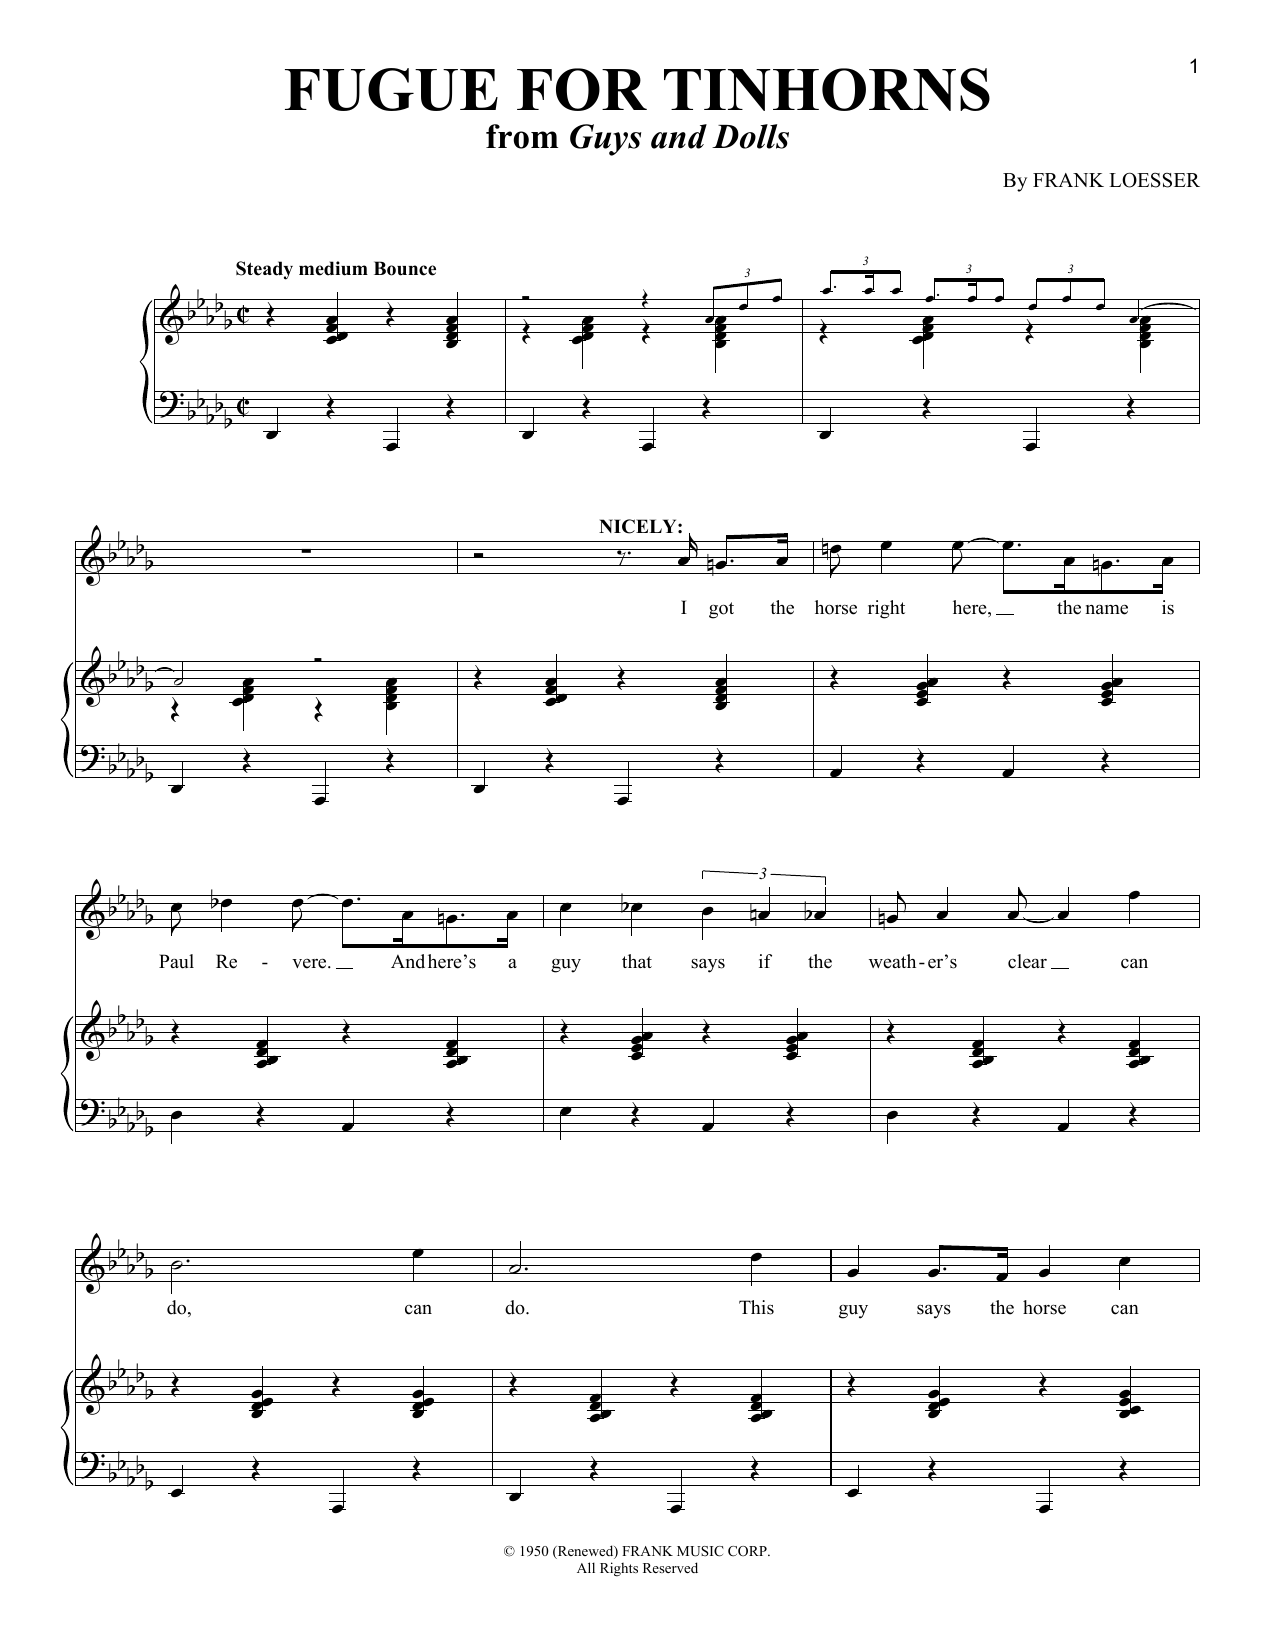 Frank Loesser Fugue For Tinhorns Sheet Music Notes & Chords for Piano & Vocal - Download or Print PDF